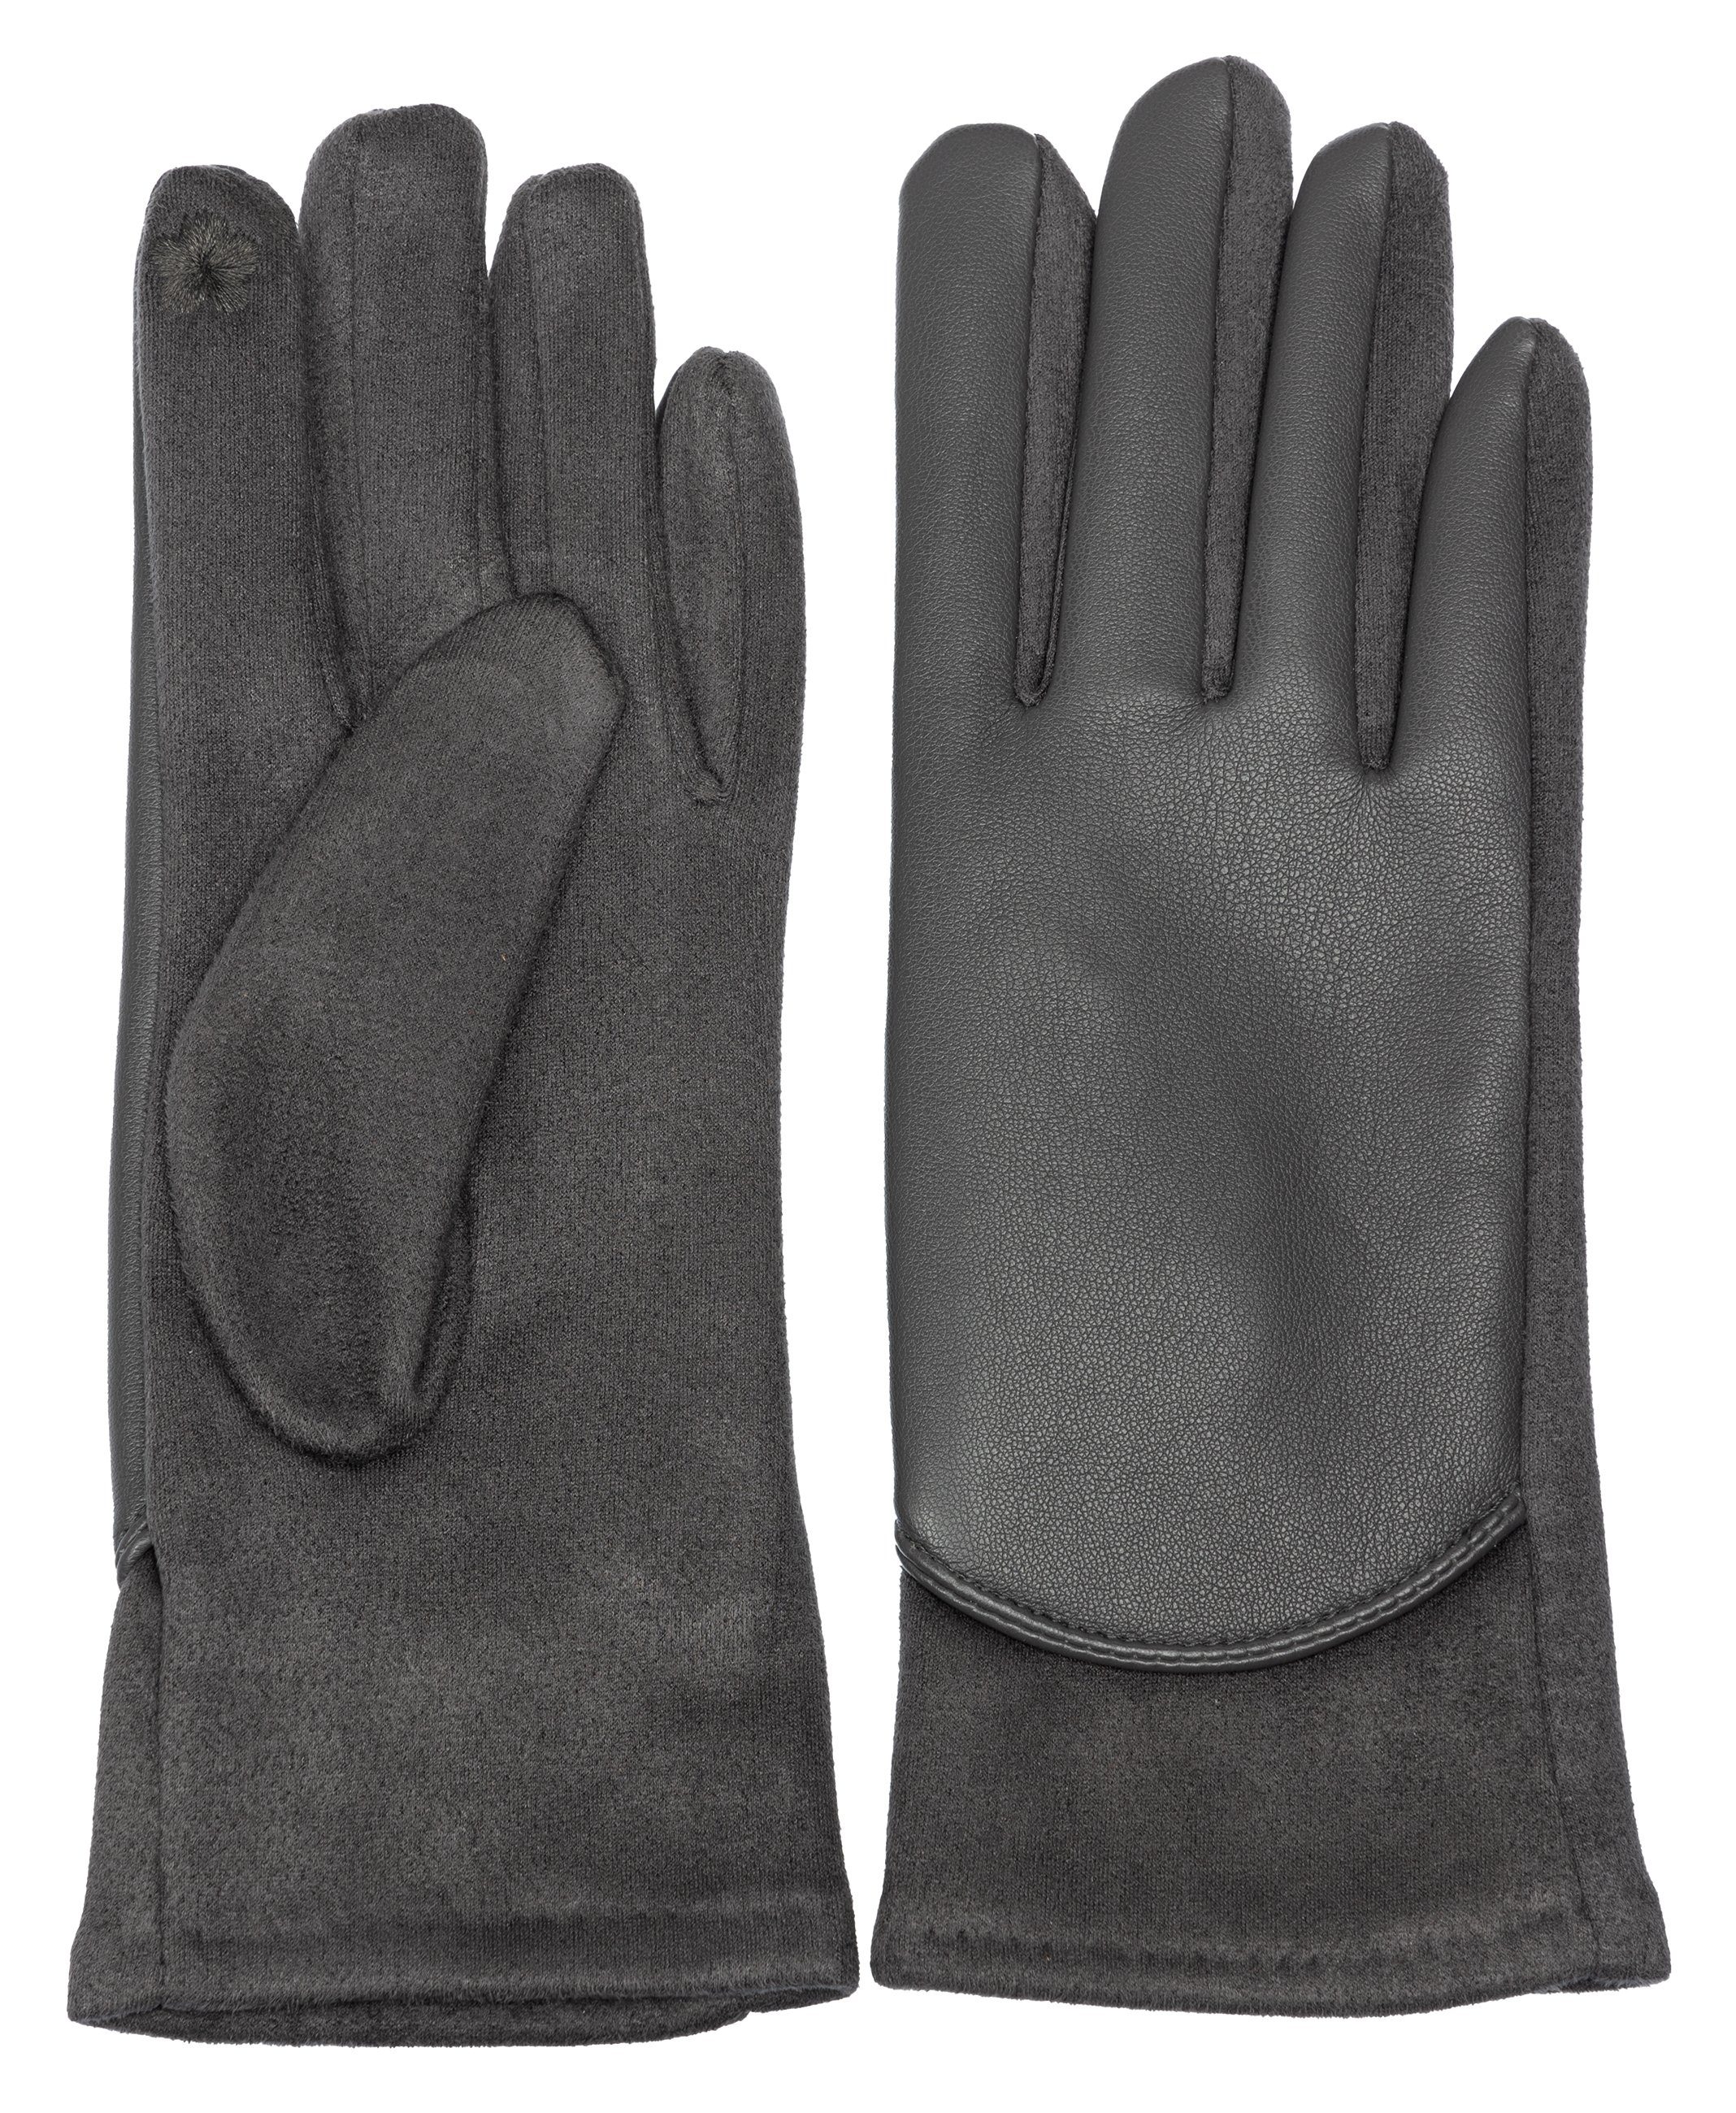 Caspar Strickhandschuhe GLV016 klassisch elegante uni Damen Handschuhe dunkelgrau